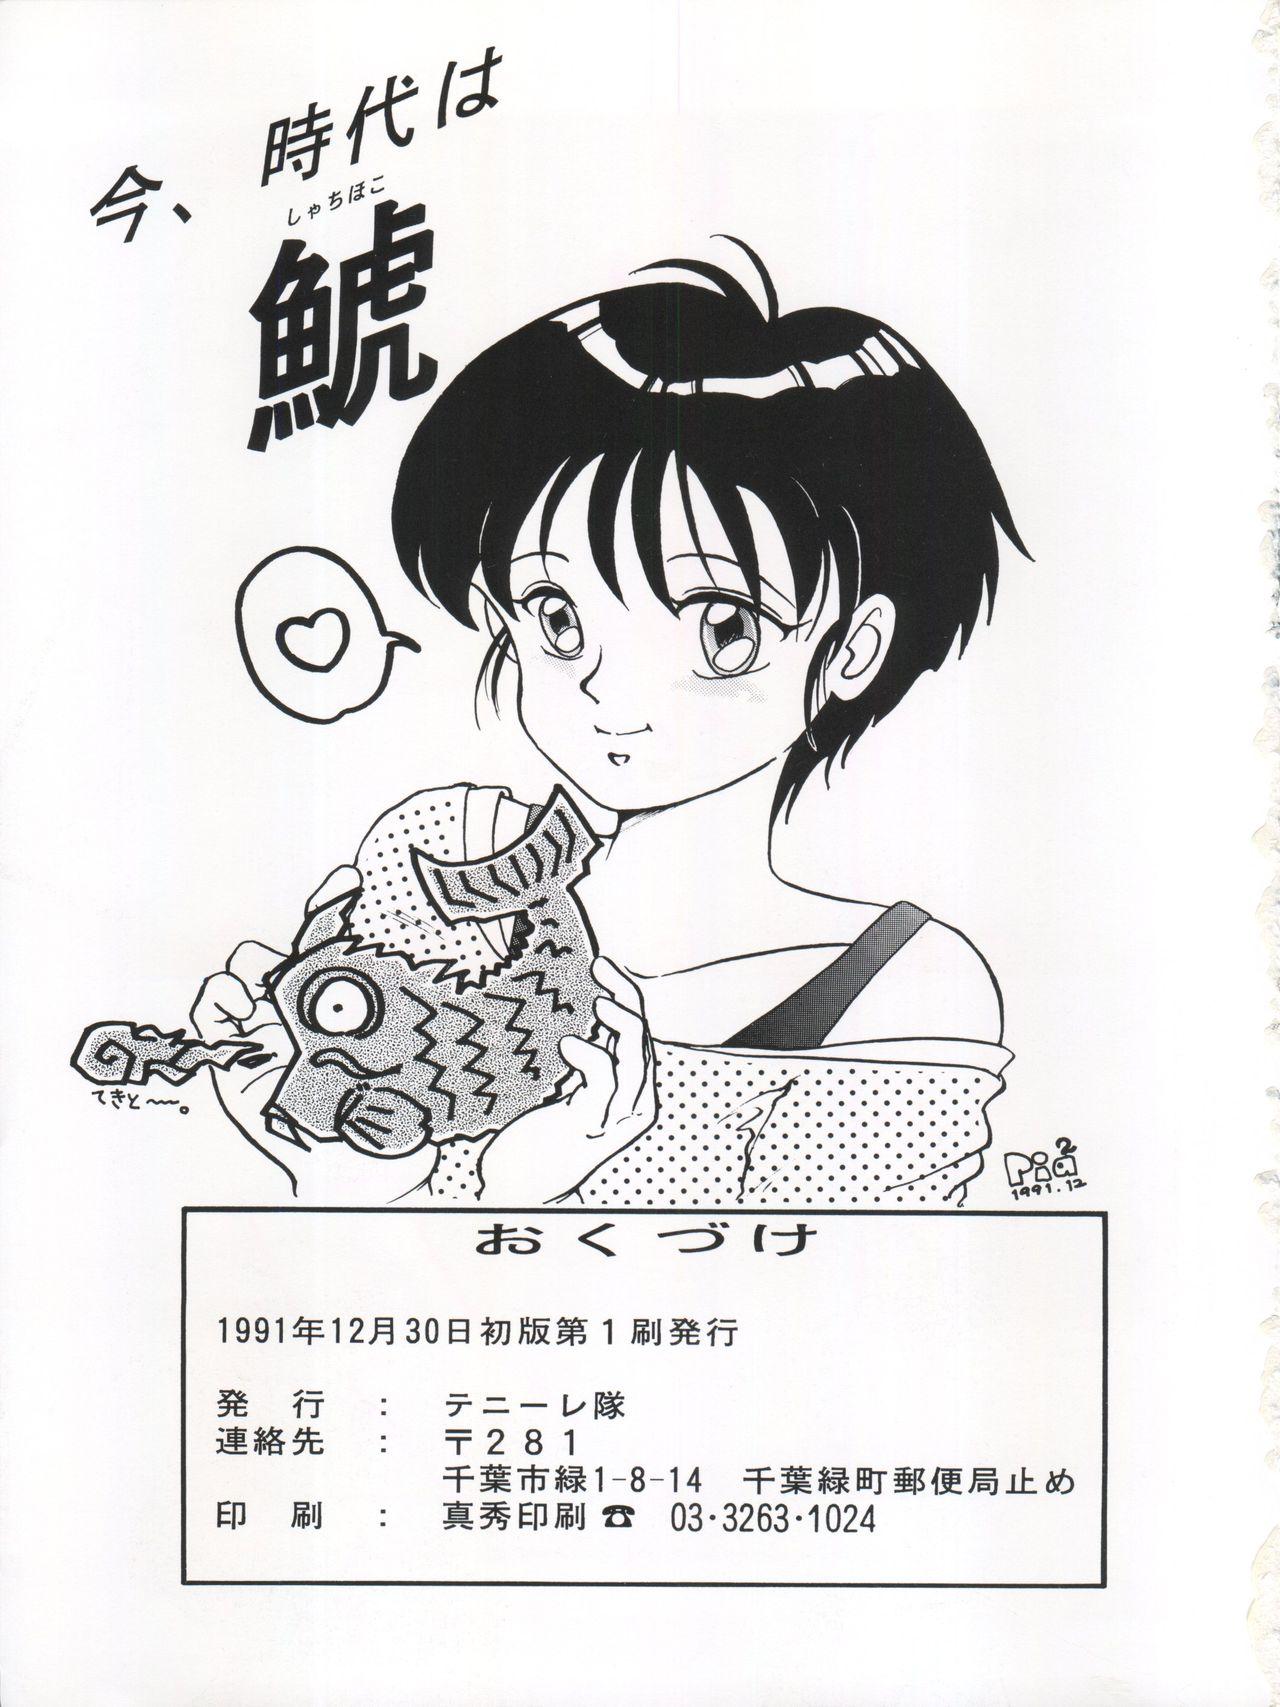 Young 逮捕されちゃうぞ - Fushigi no umi no nadia Youre under arrest Minky momo 3x3 eyes Funny - Page 47